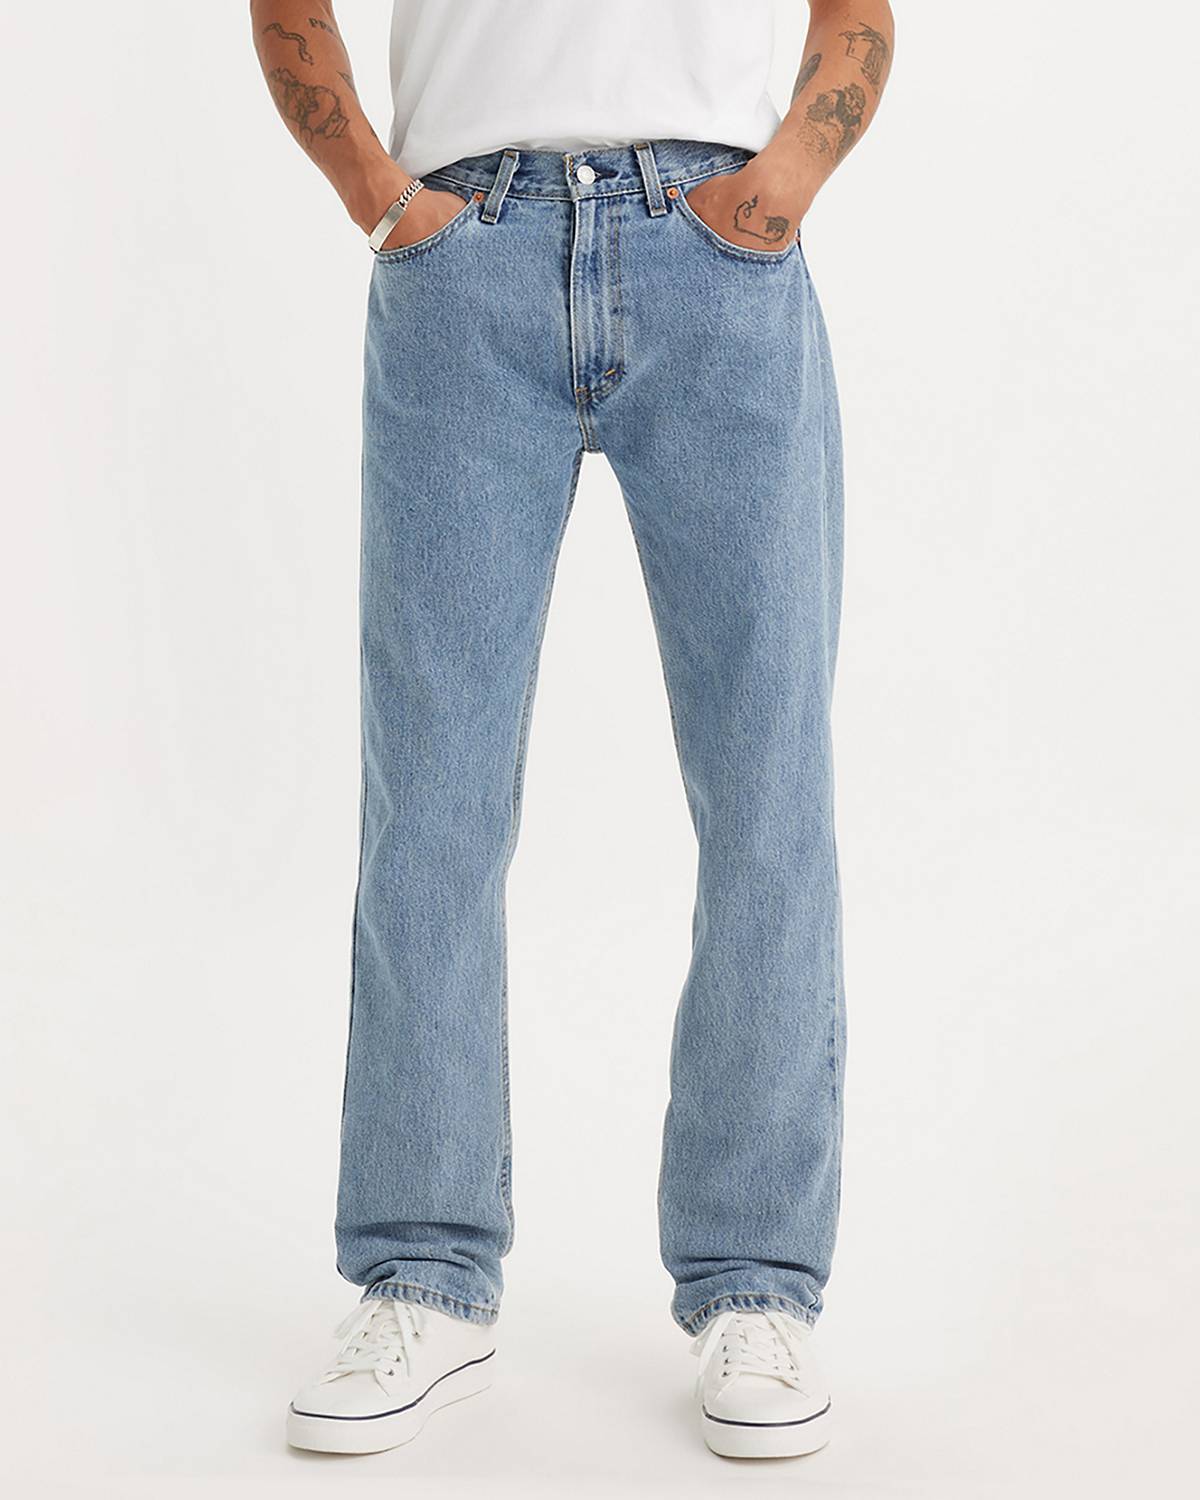 Men's 514 Jeans: Straight Fit Jean Styles